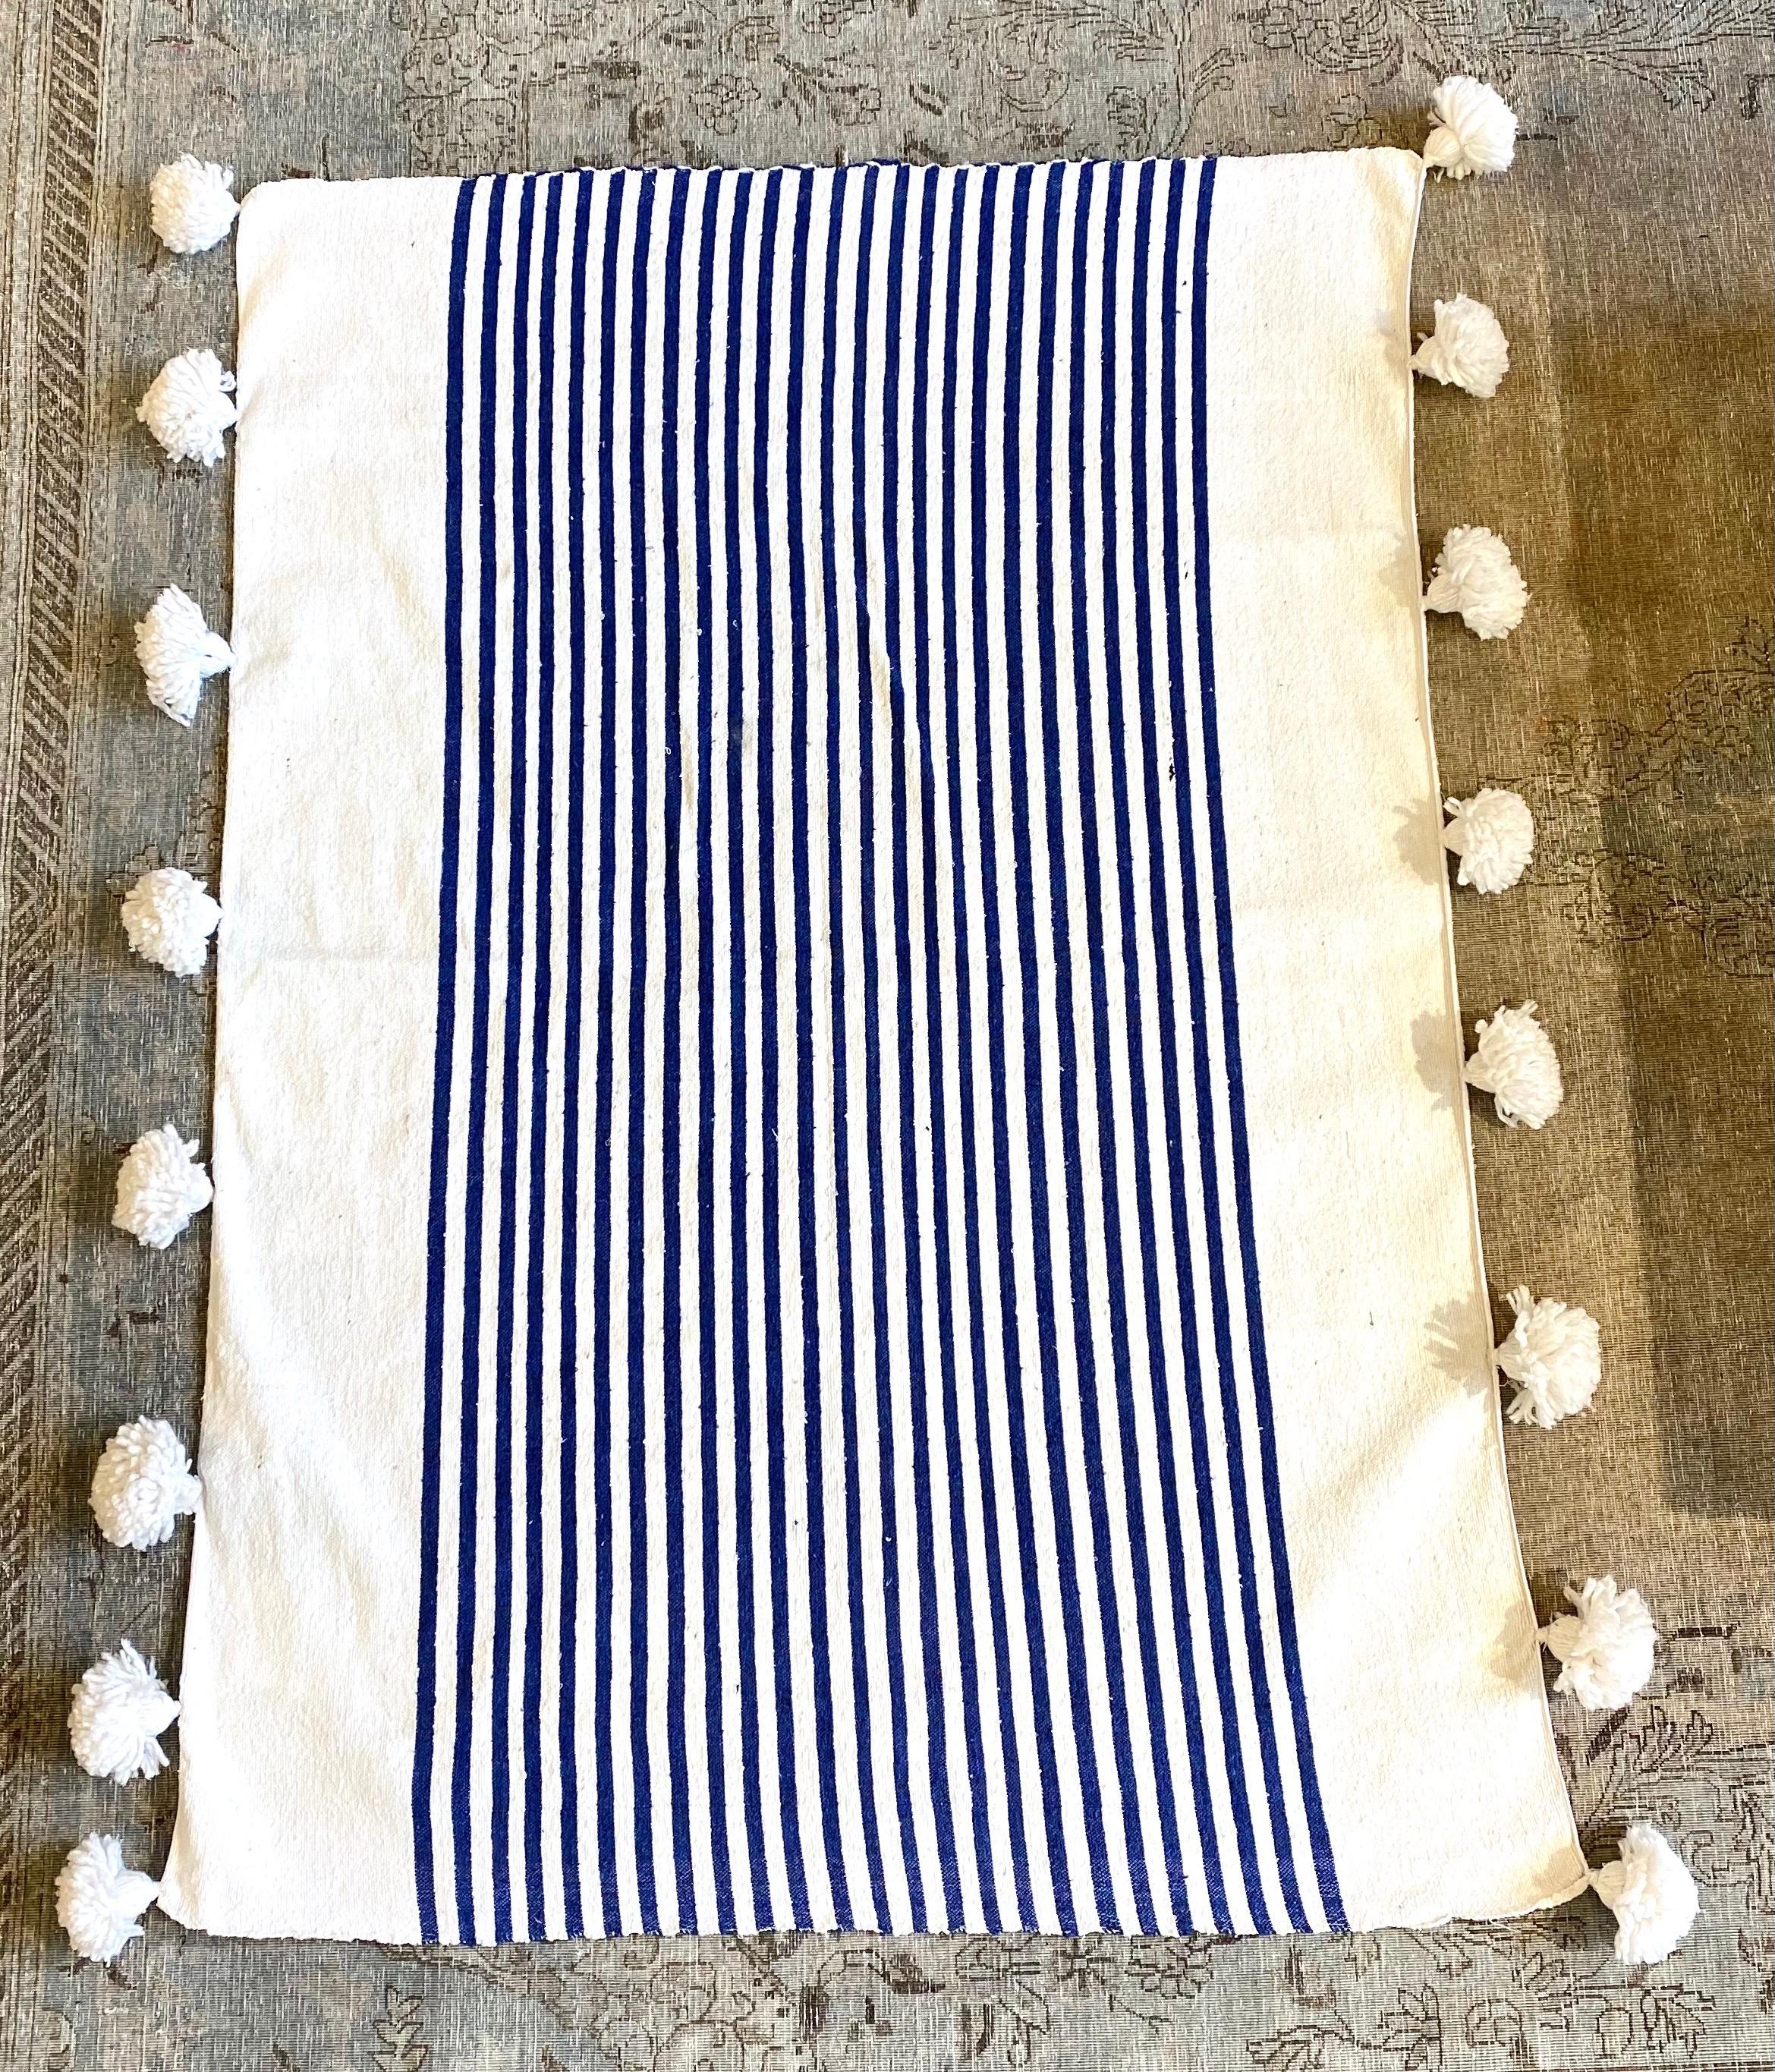 Pom cotton white/blue blanket

Measures: 60